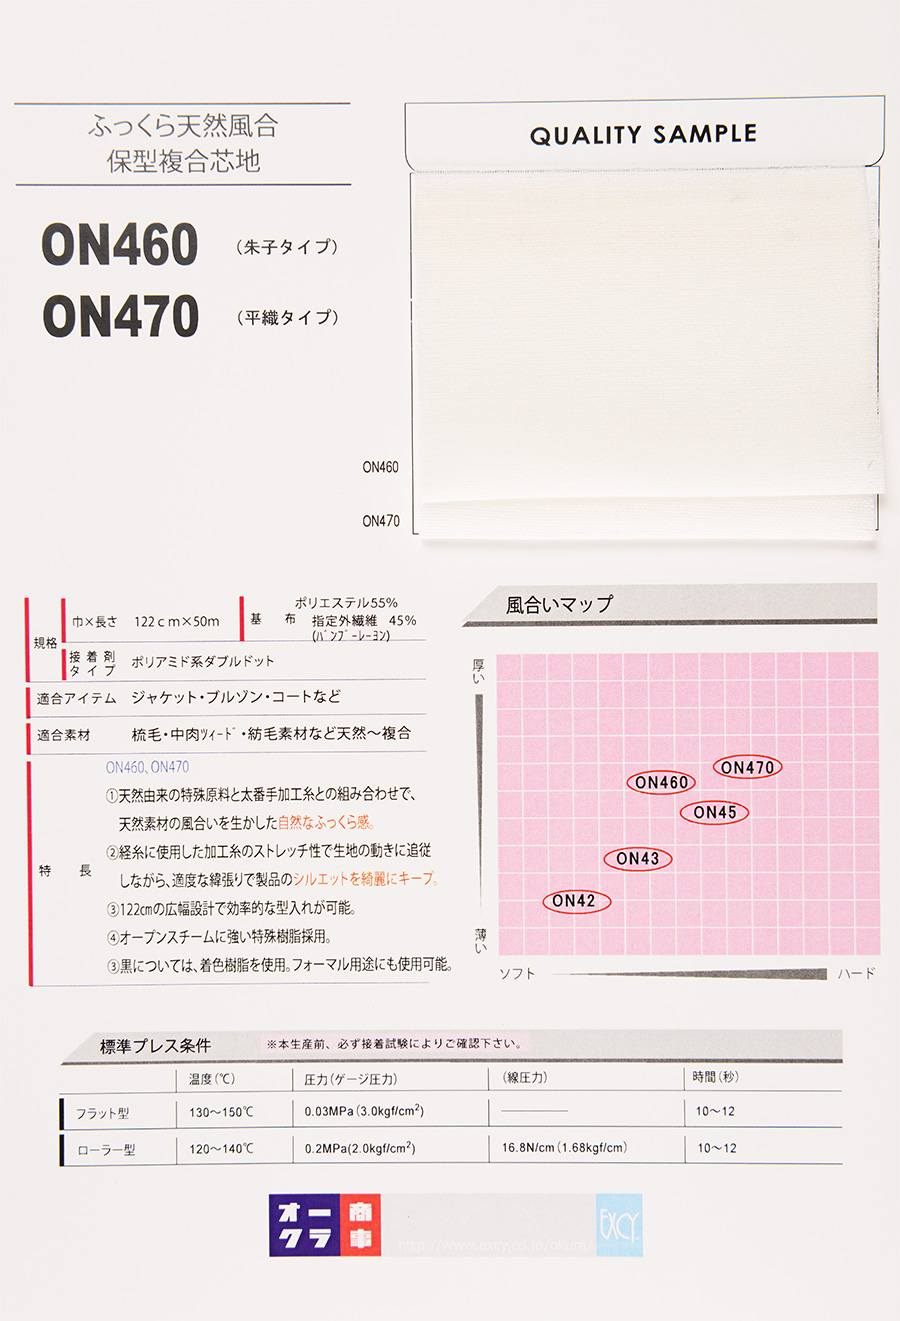 ON470 Composite Type For Heavy Clothing (100D Plain Weave) 100D×50/-[Interlining] Nittobo